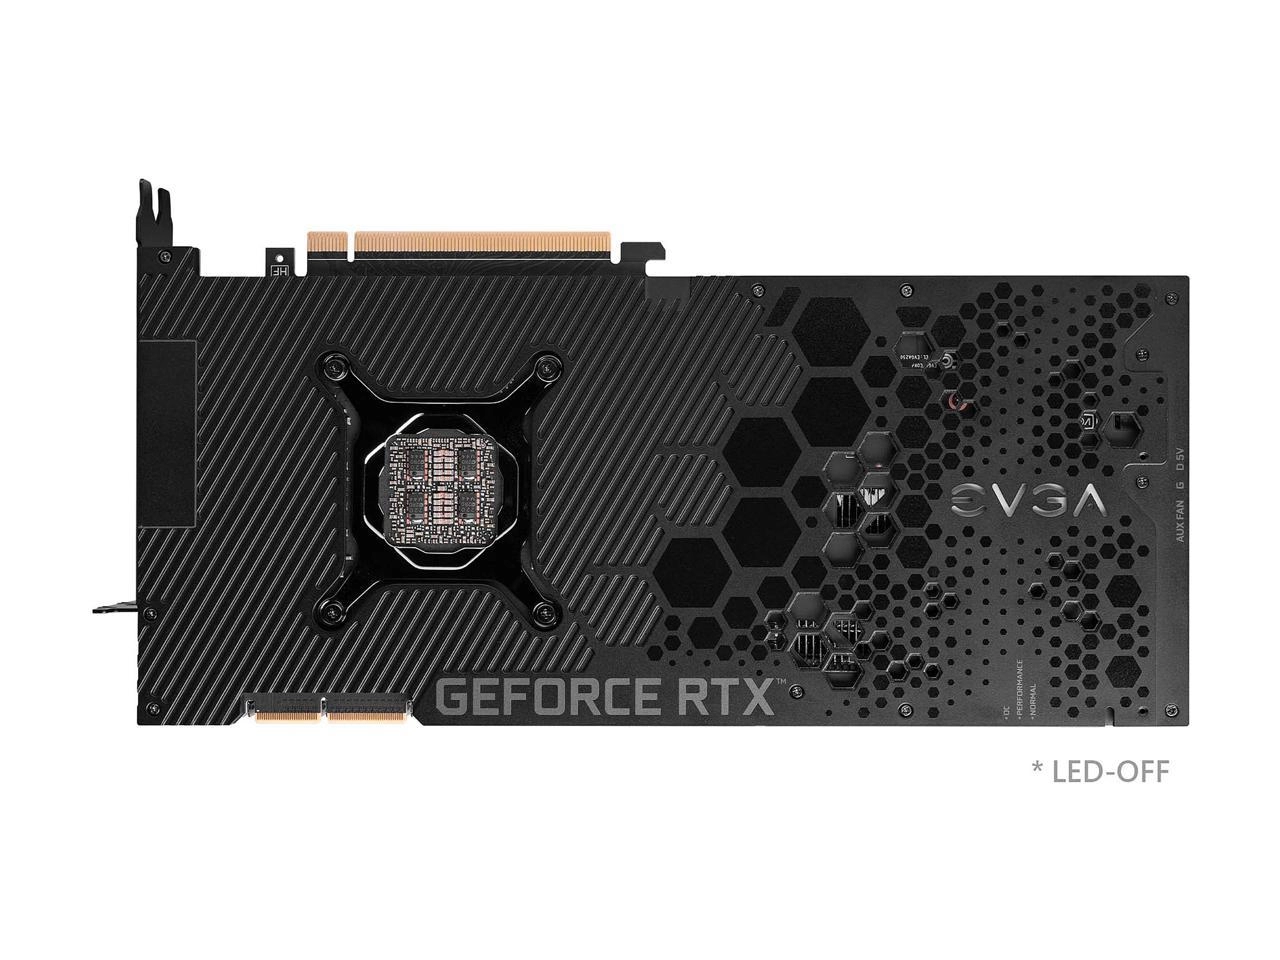 EVGA GeForce RTX 3090 Ti FTW3 ULTRA GAMING Behind View